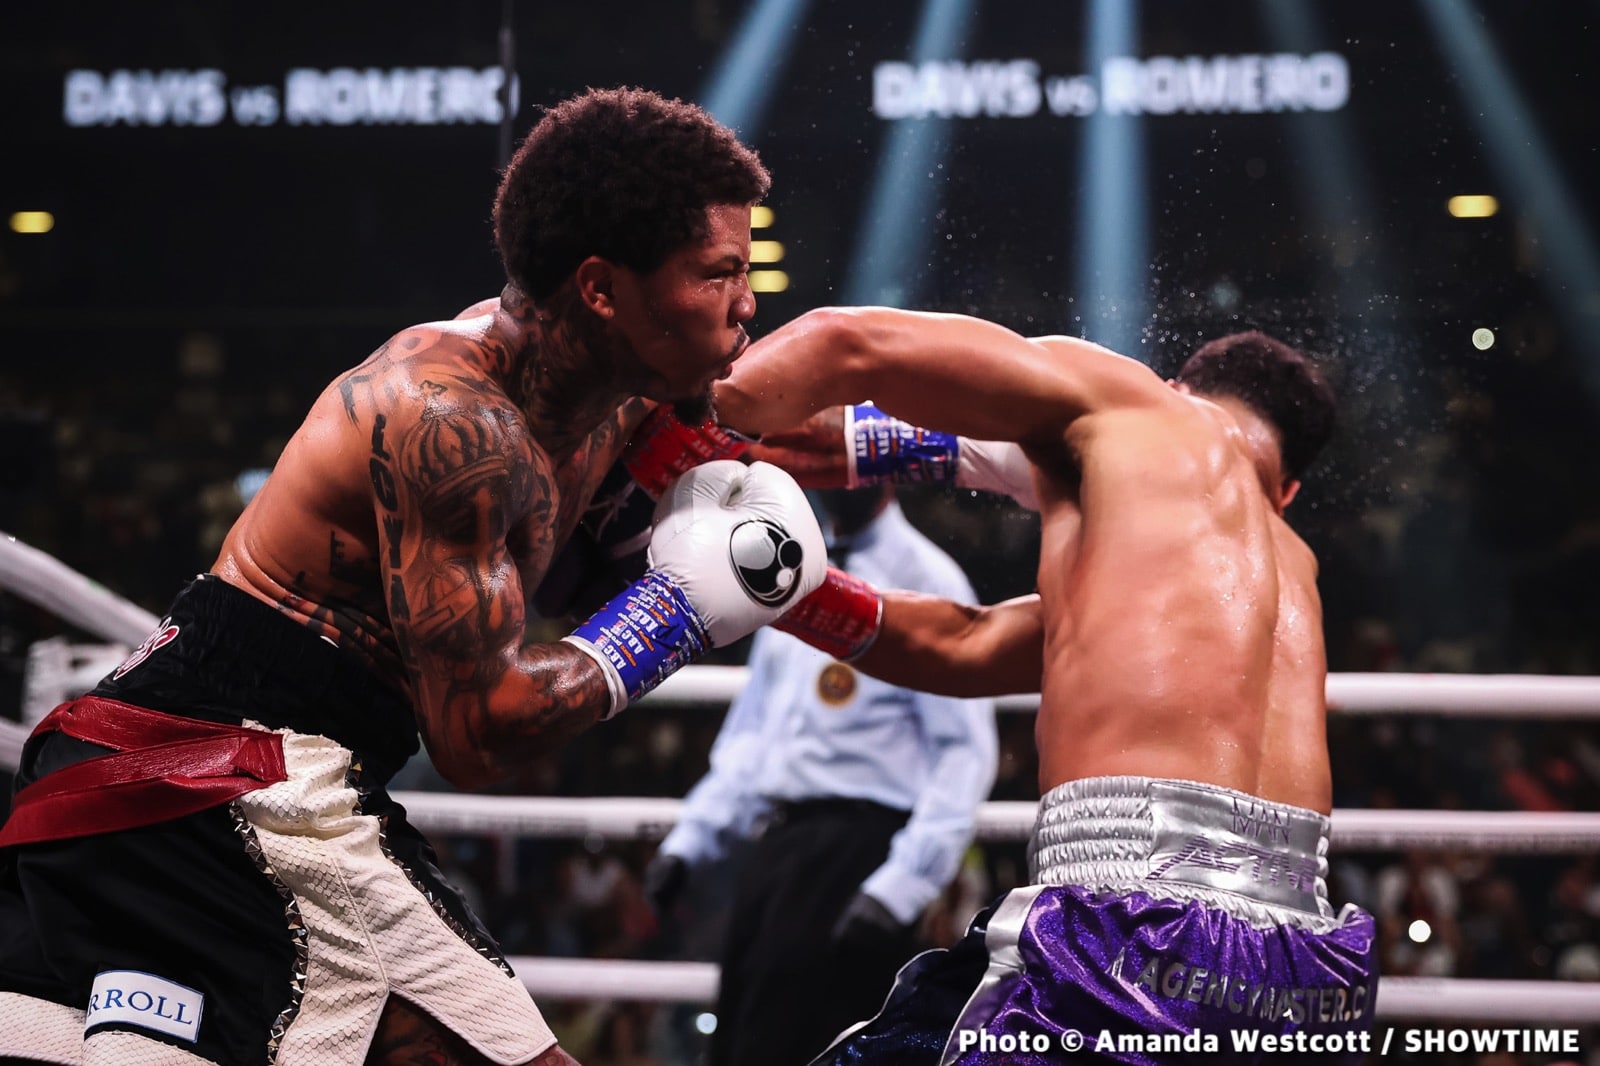 Photos: Tank Davis smashes Rolando Romero